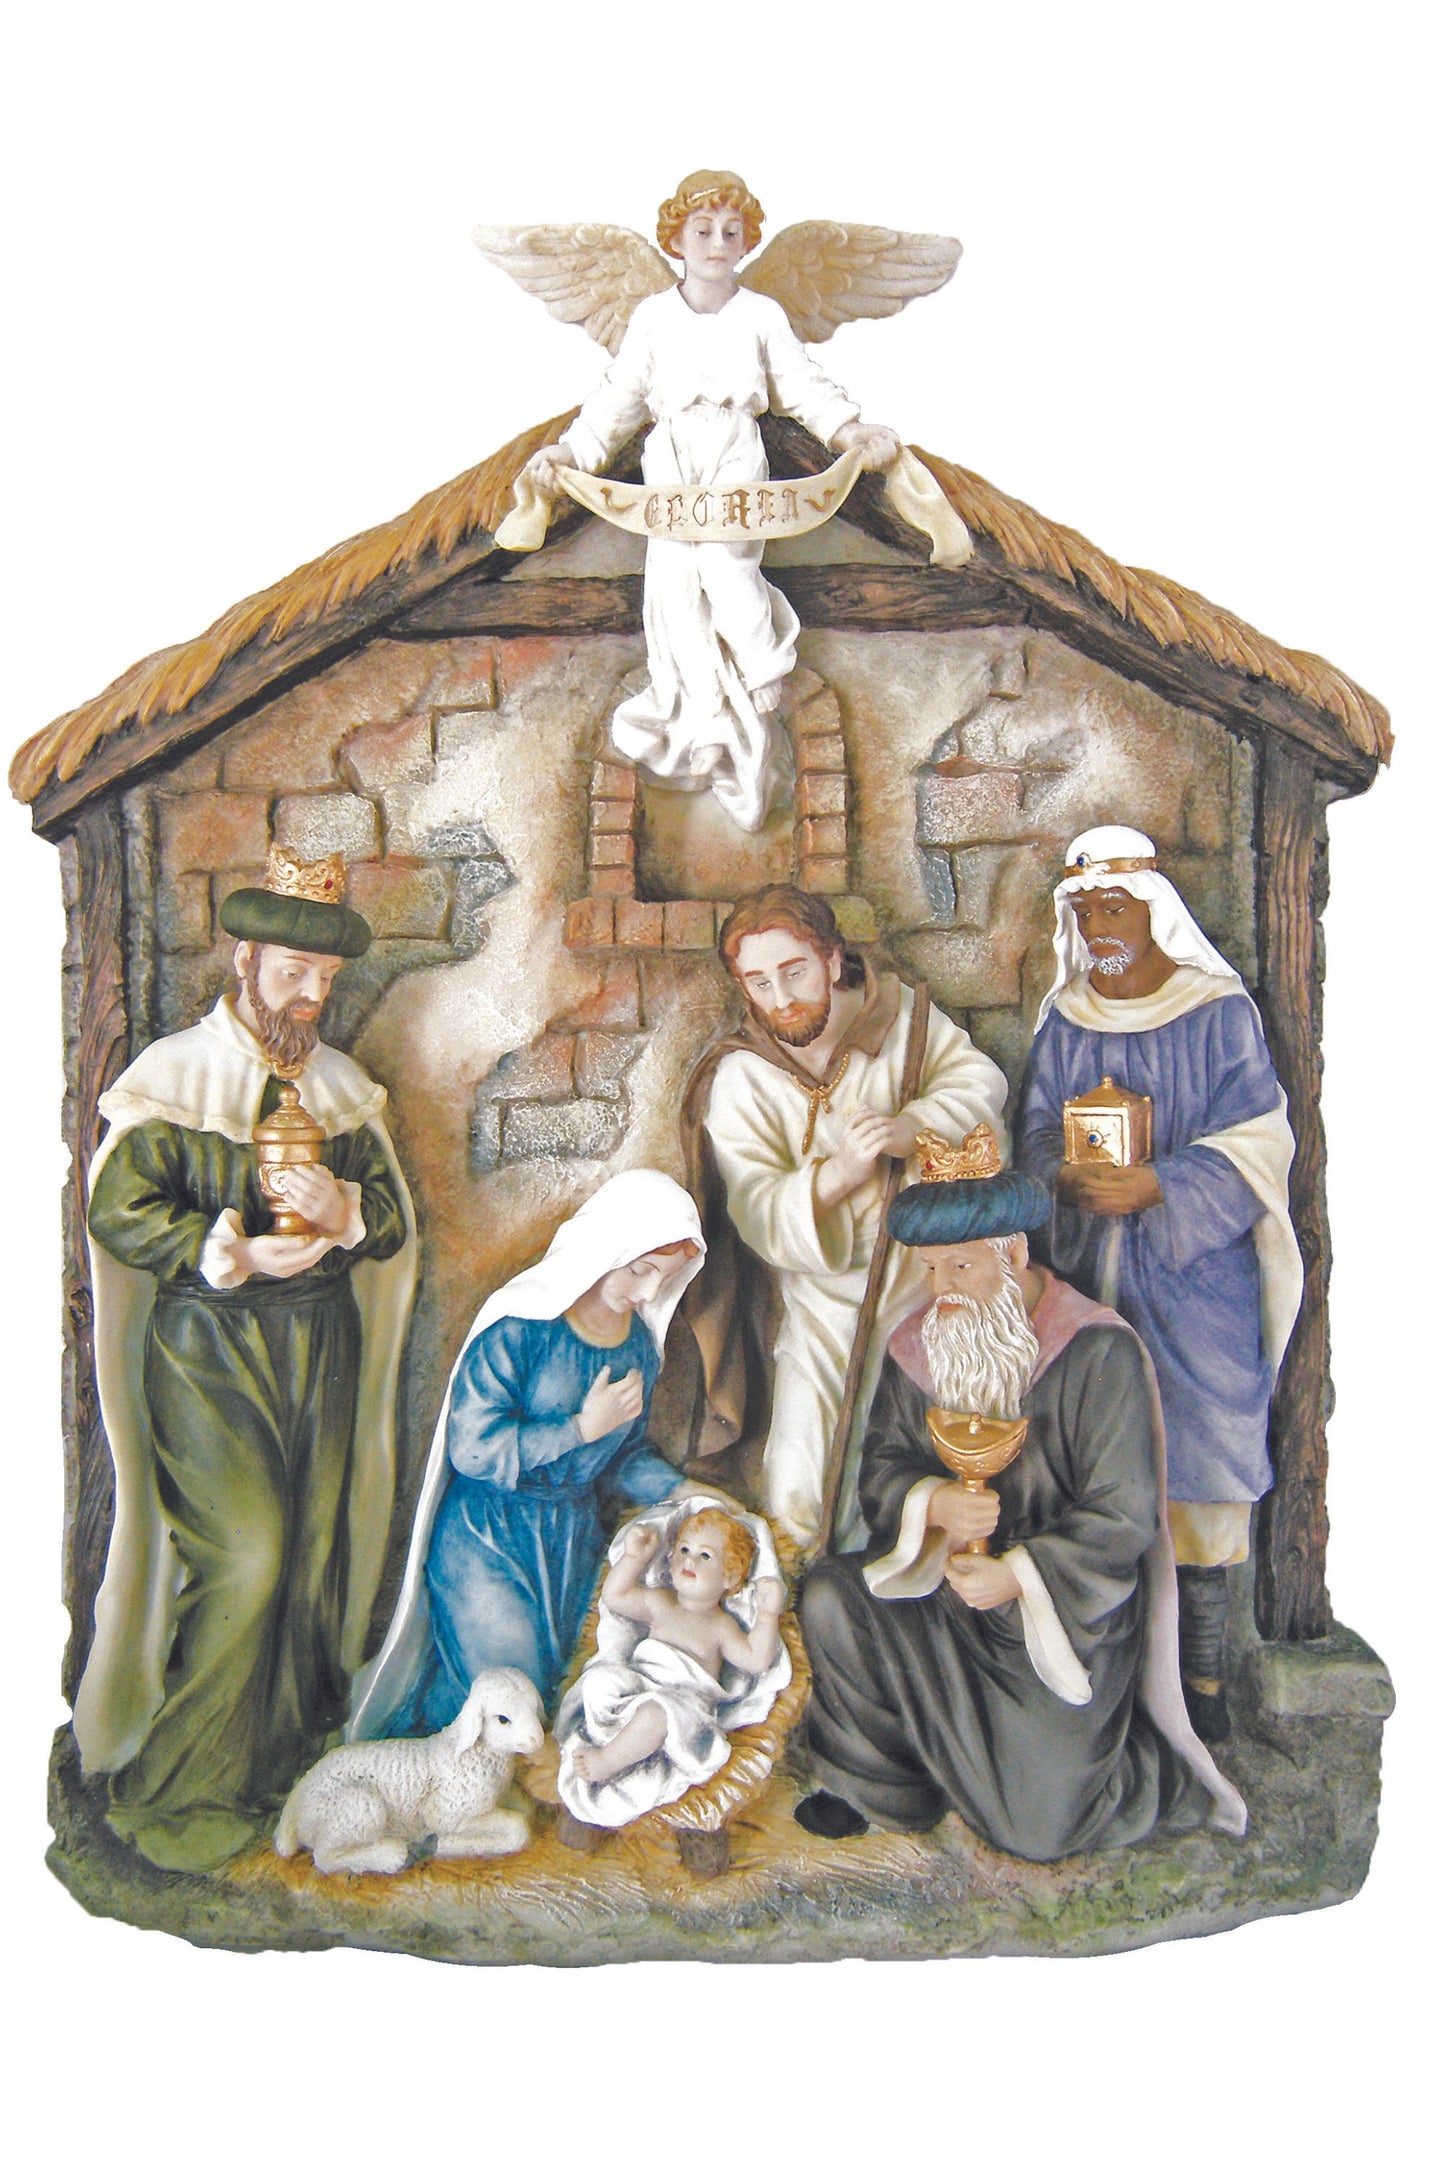 SR-75851-C Nativity Plaque in Color 13x16x2.75"